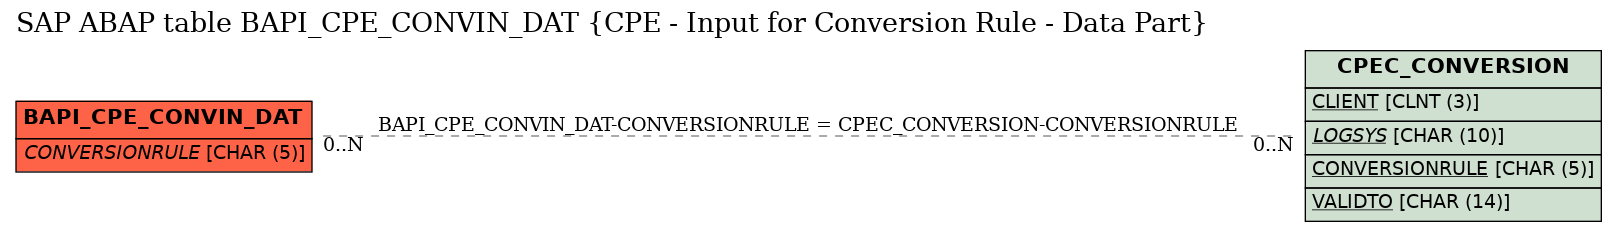 E-R Diagram for table BAPI_CPE_CONVIN_DAT (CPE - Input for Conversion Rule - Data Part)